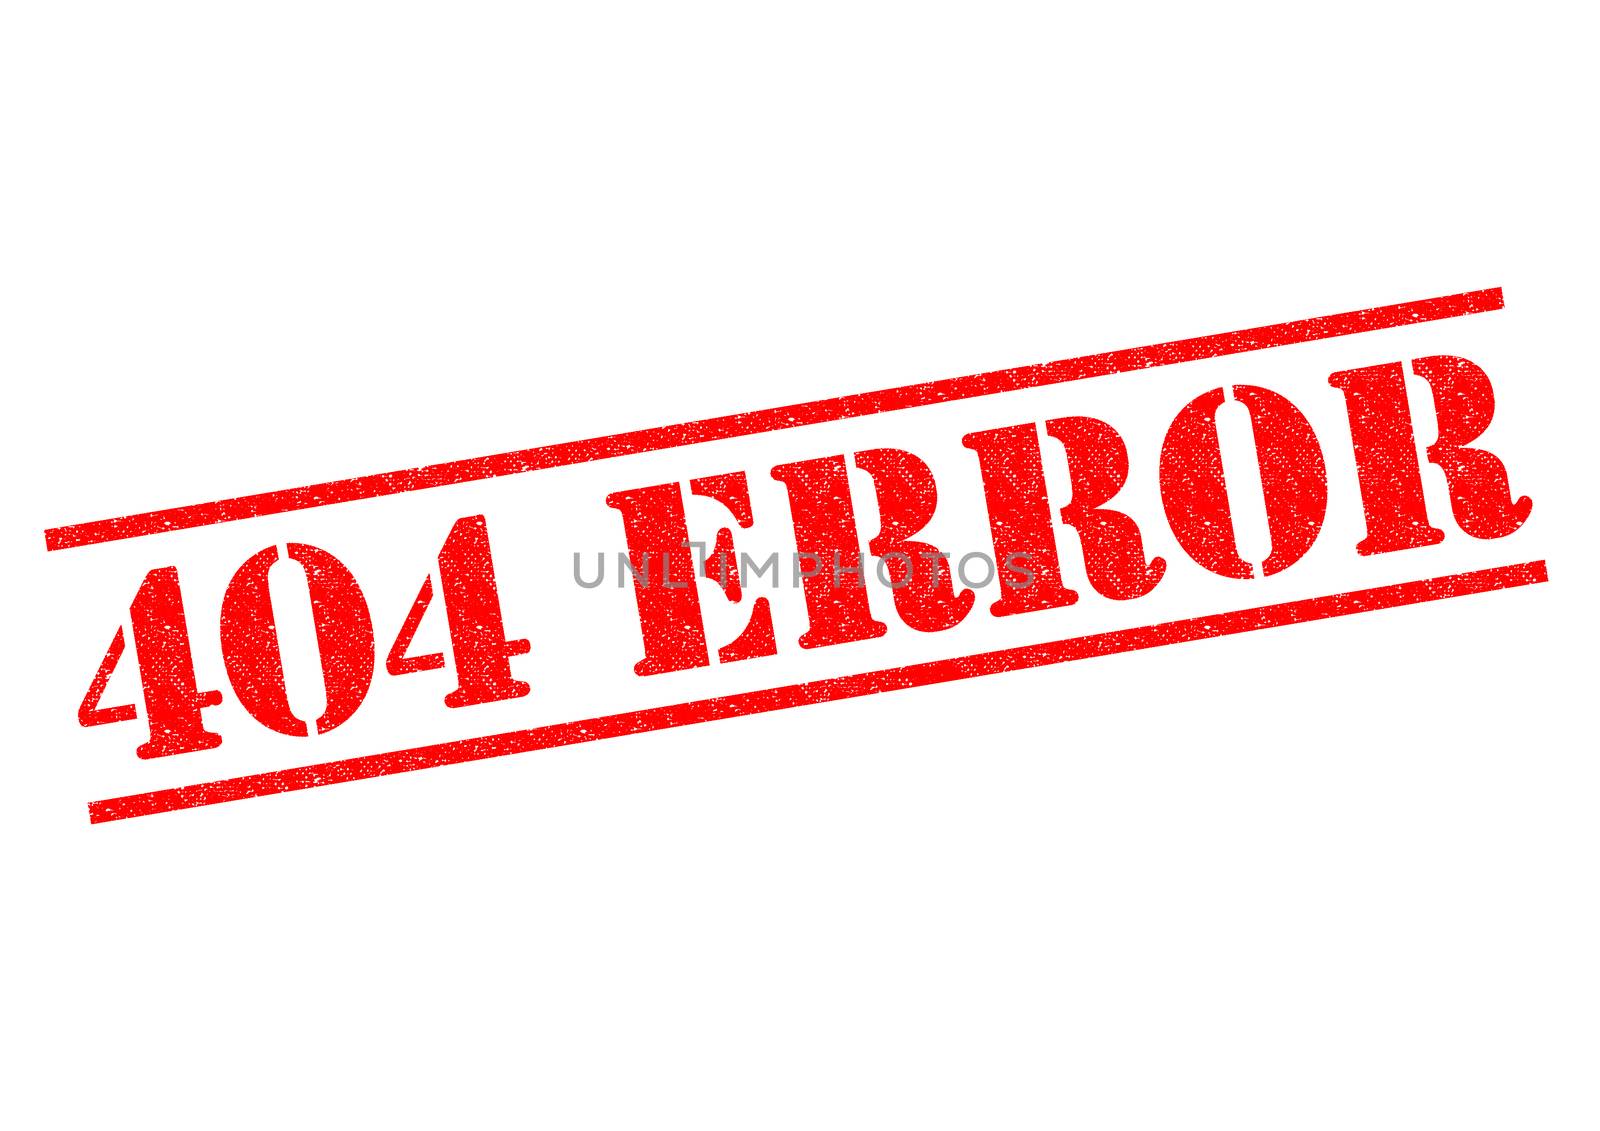 404 ERROR by chrisdorney